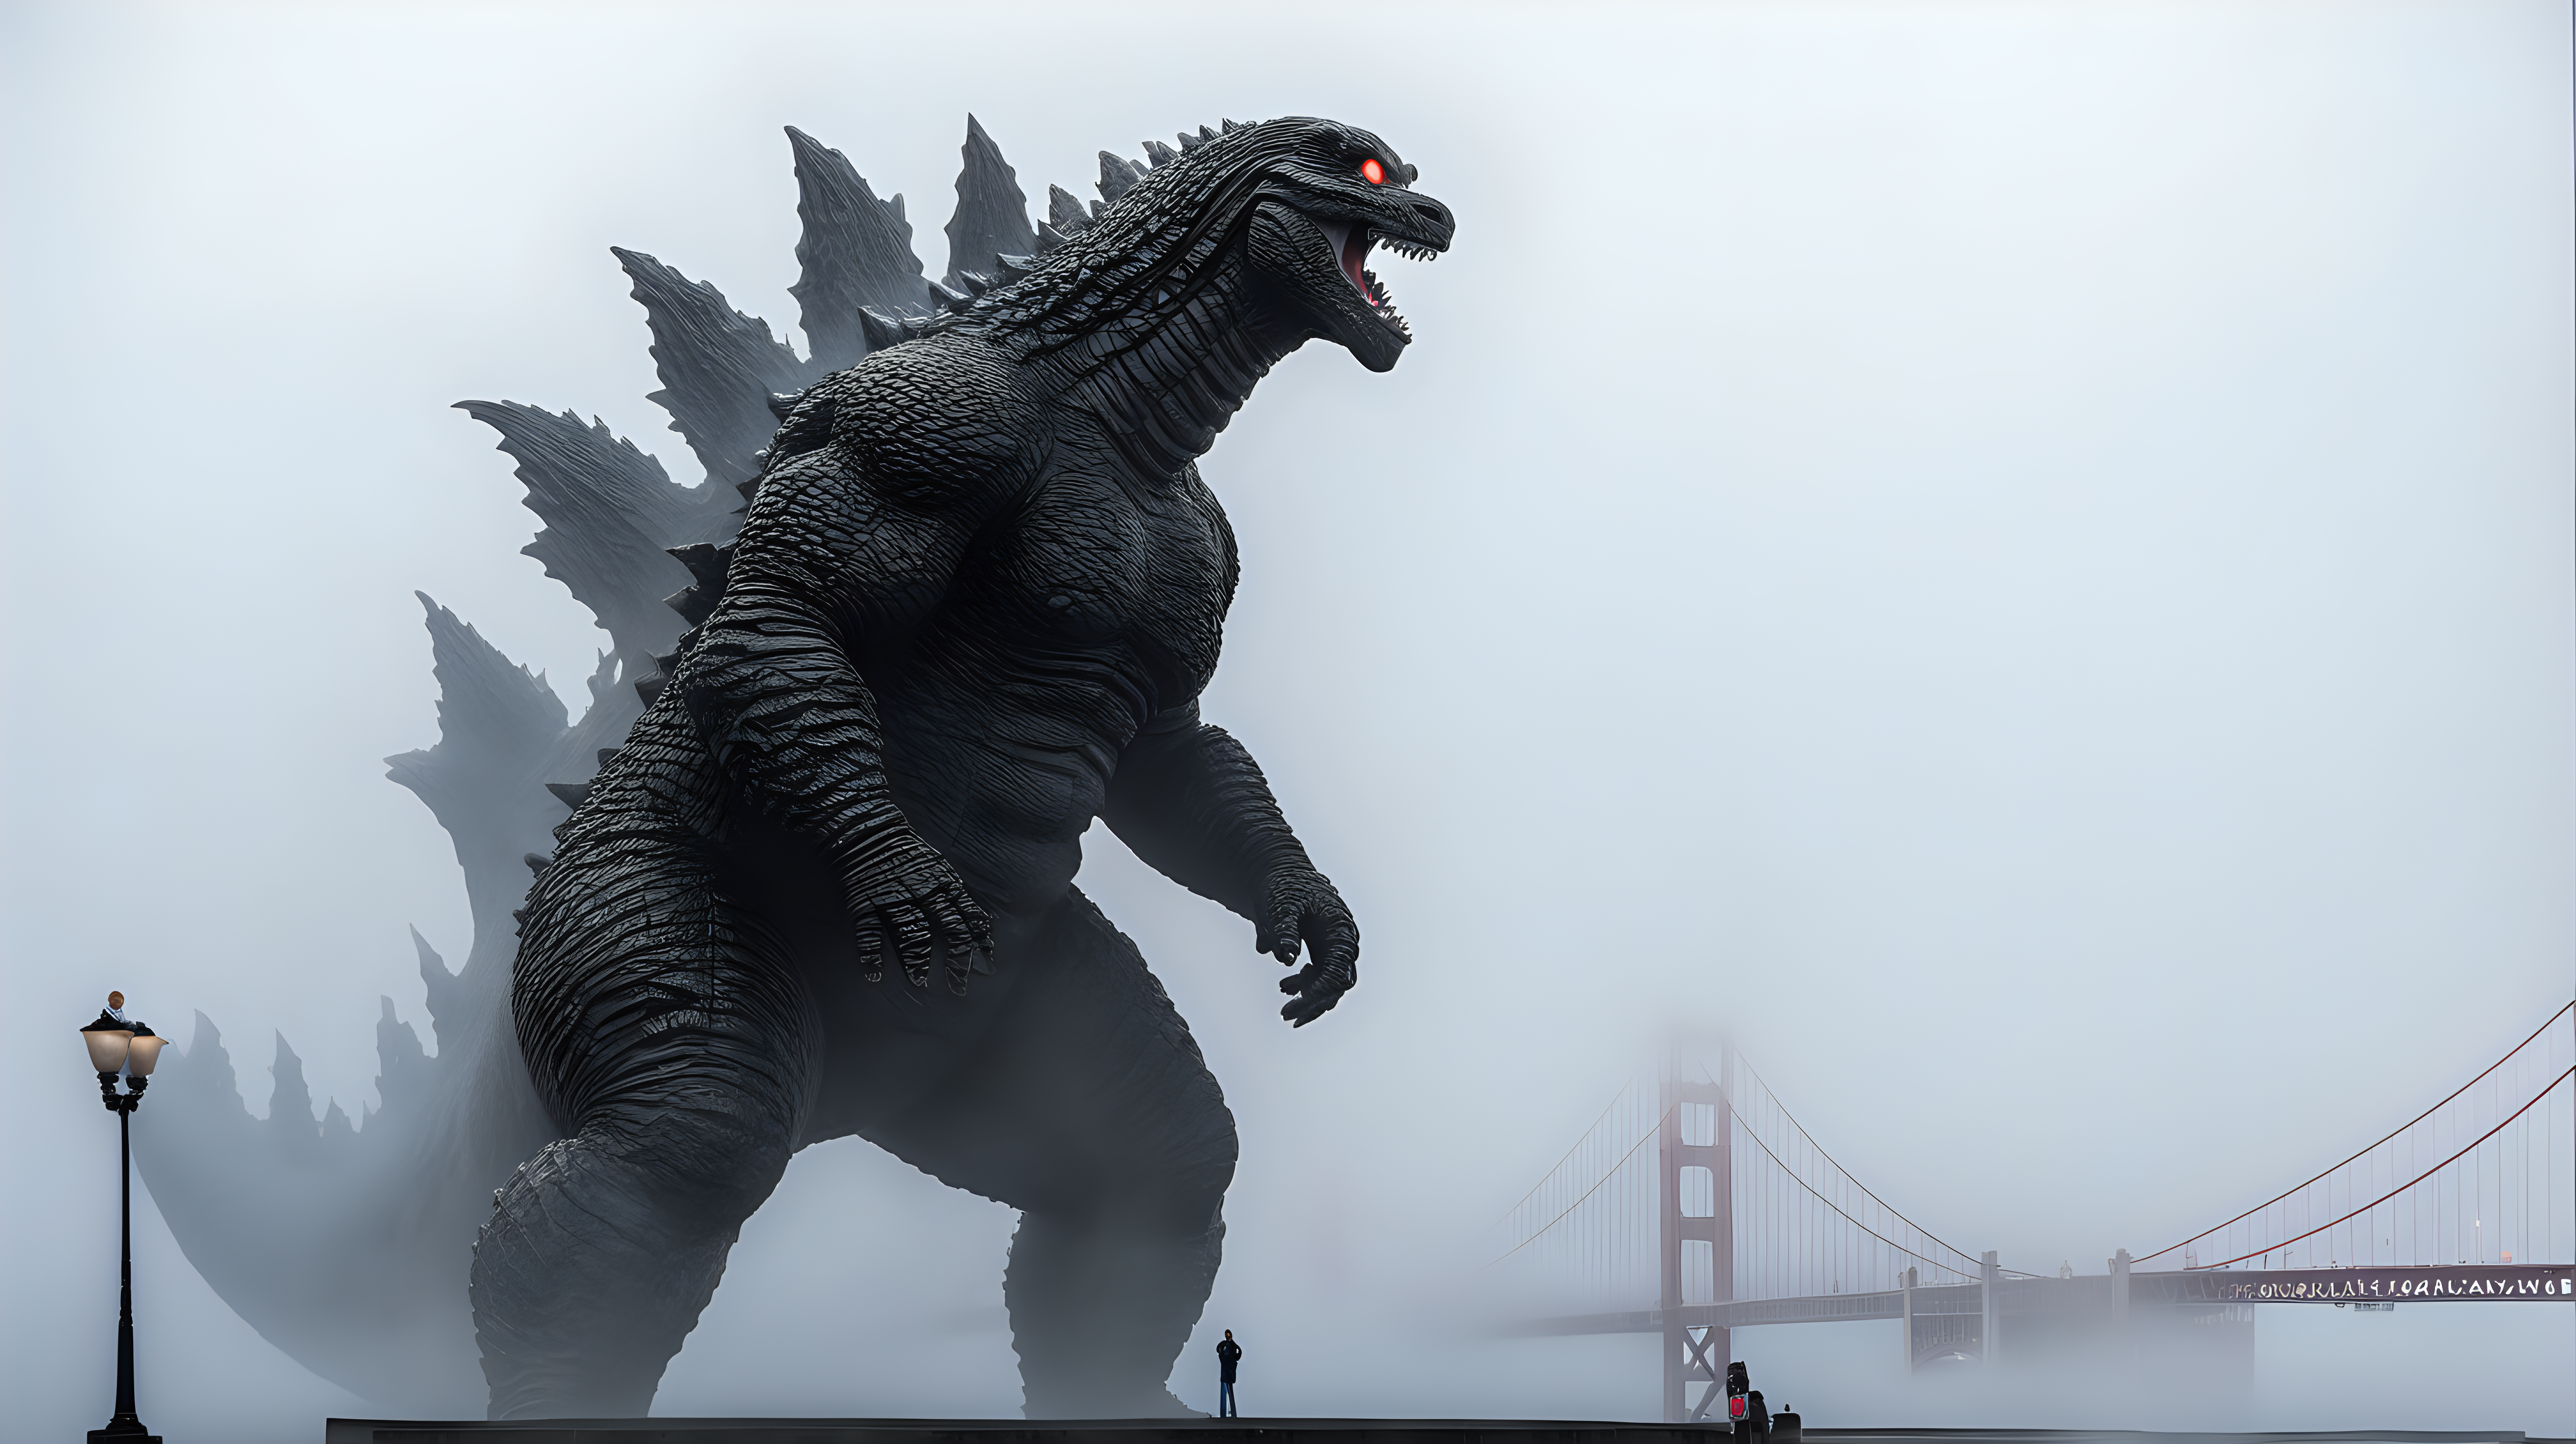 Godzilla in San Francisco in fog